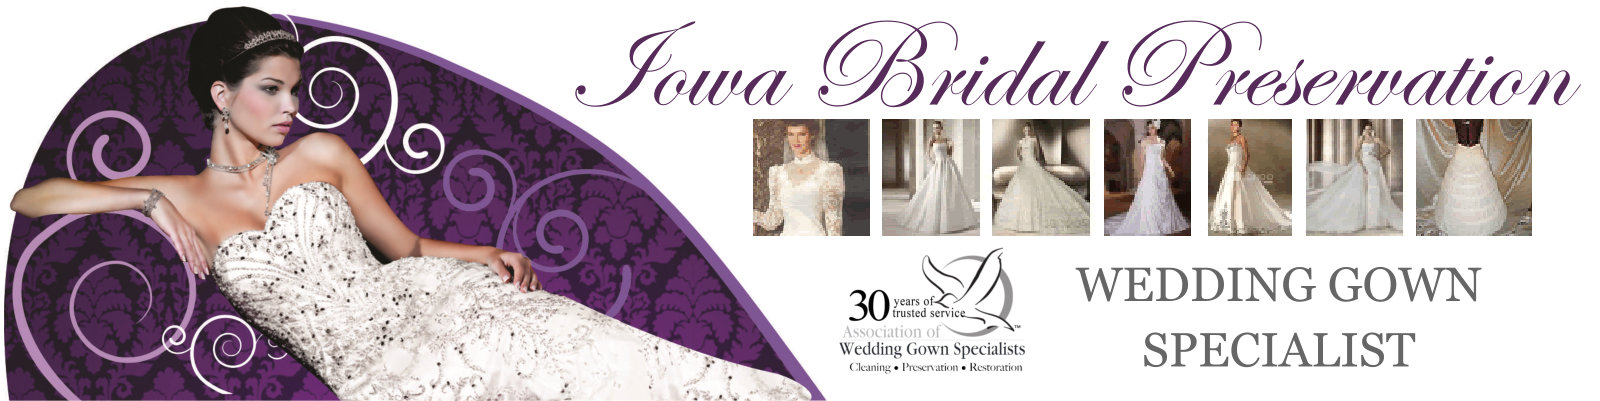 Bridal Kits - Iowa Bridal Preservation